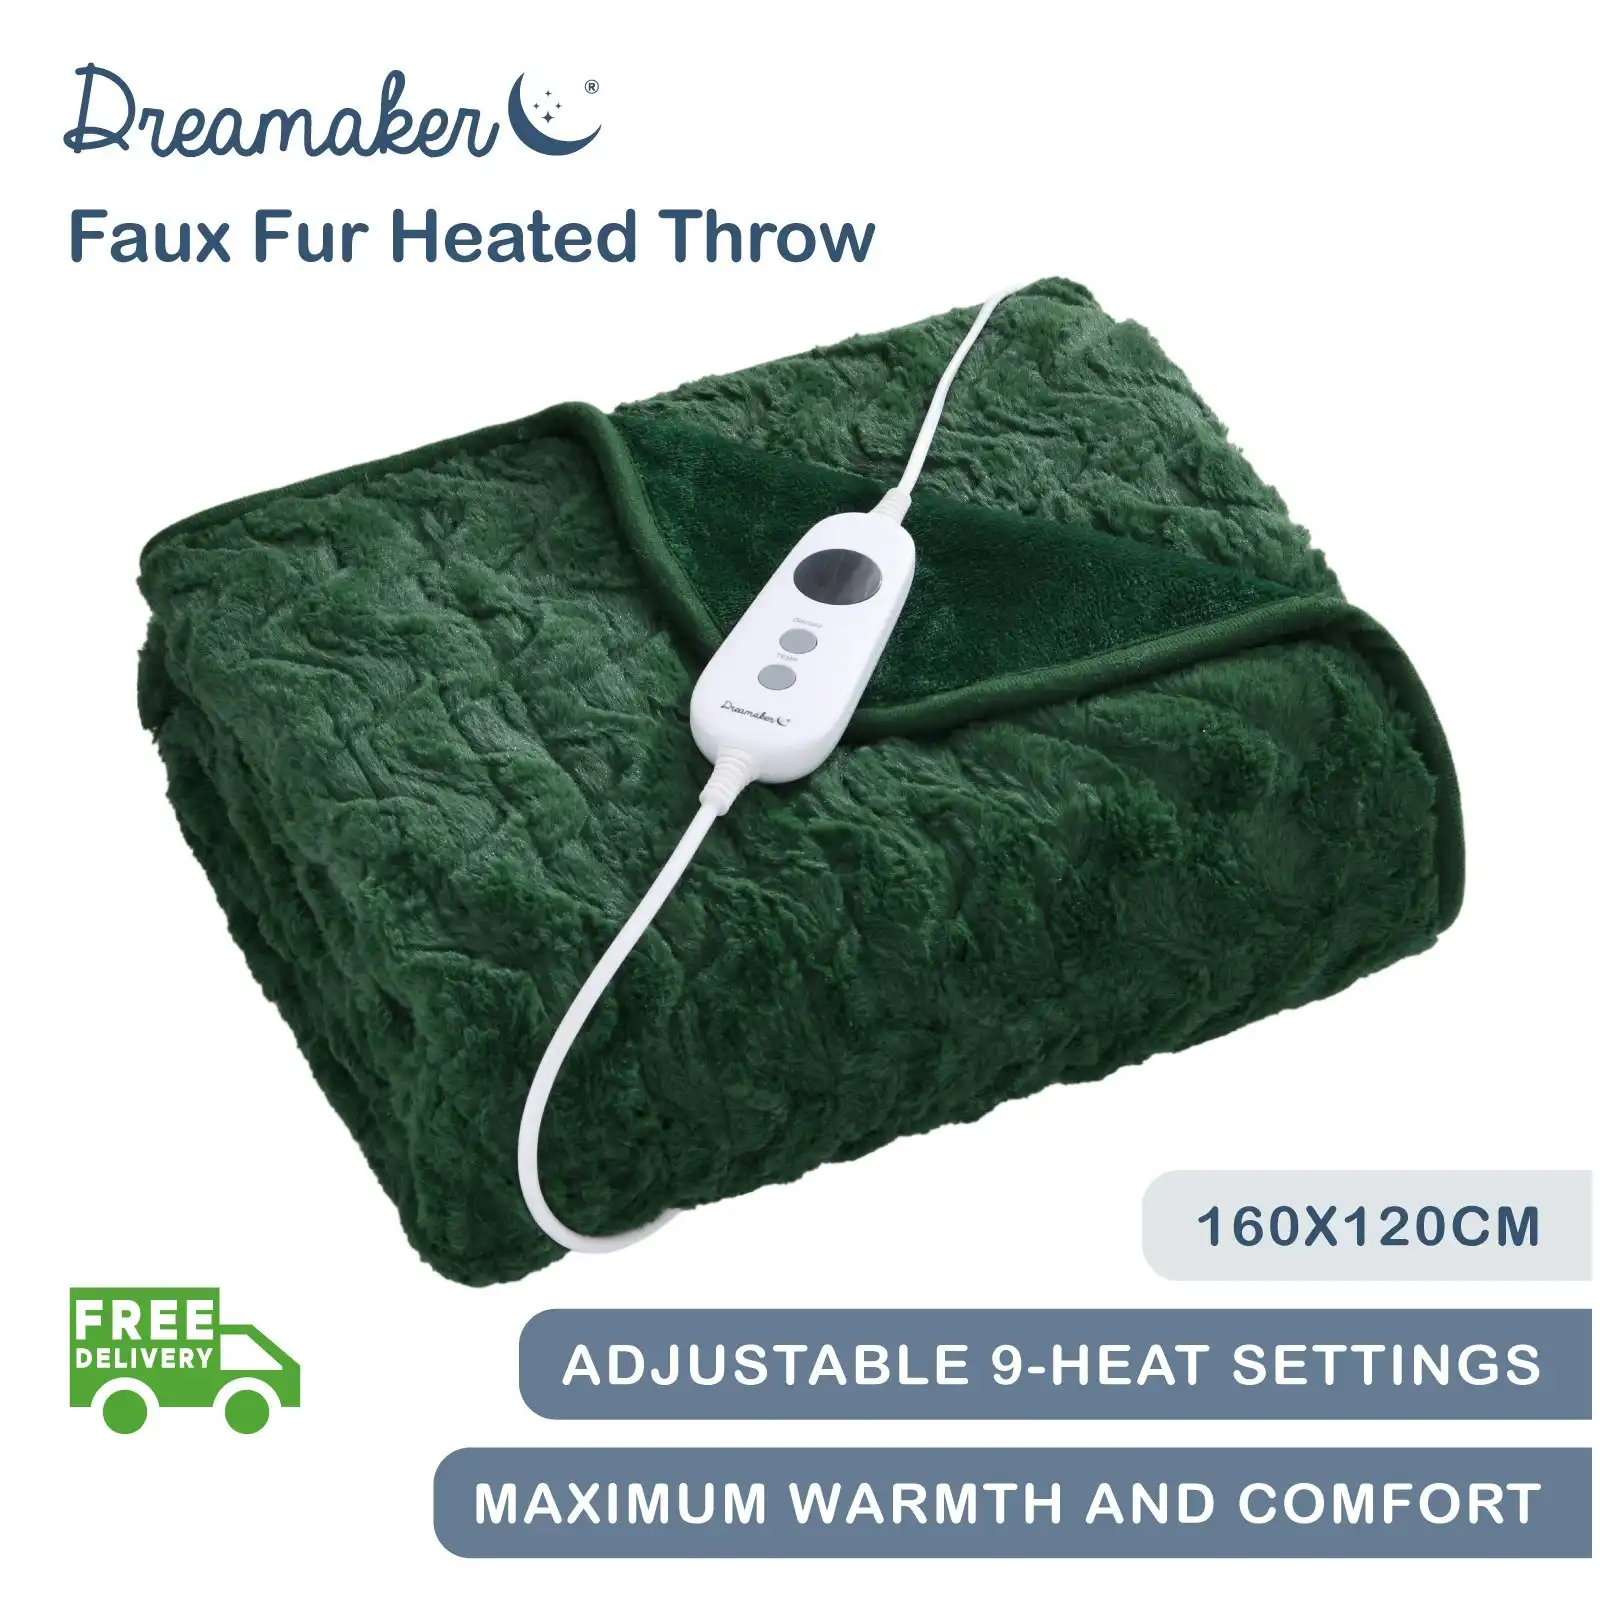 Dreamaker Faux Fur Heated Throw Eden Green 160x120cm